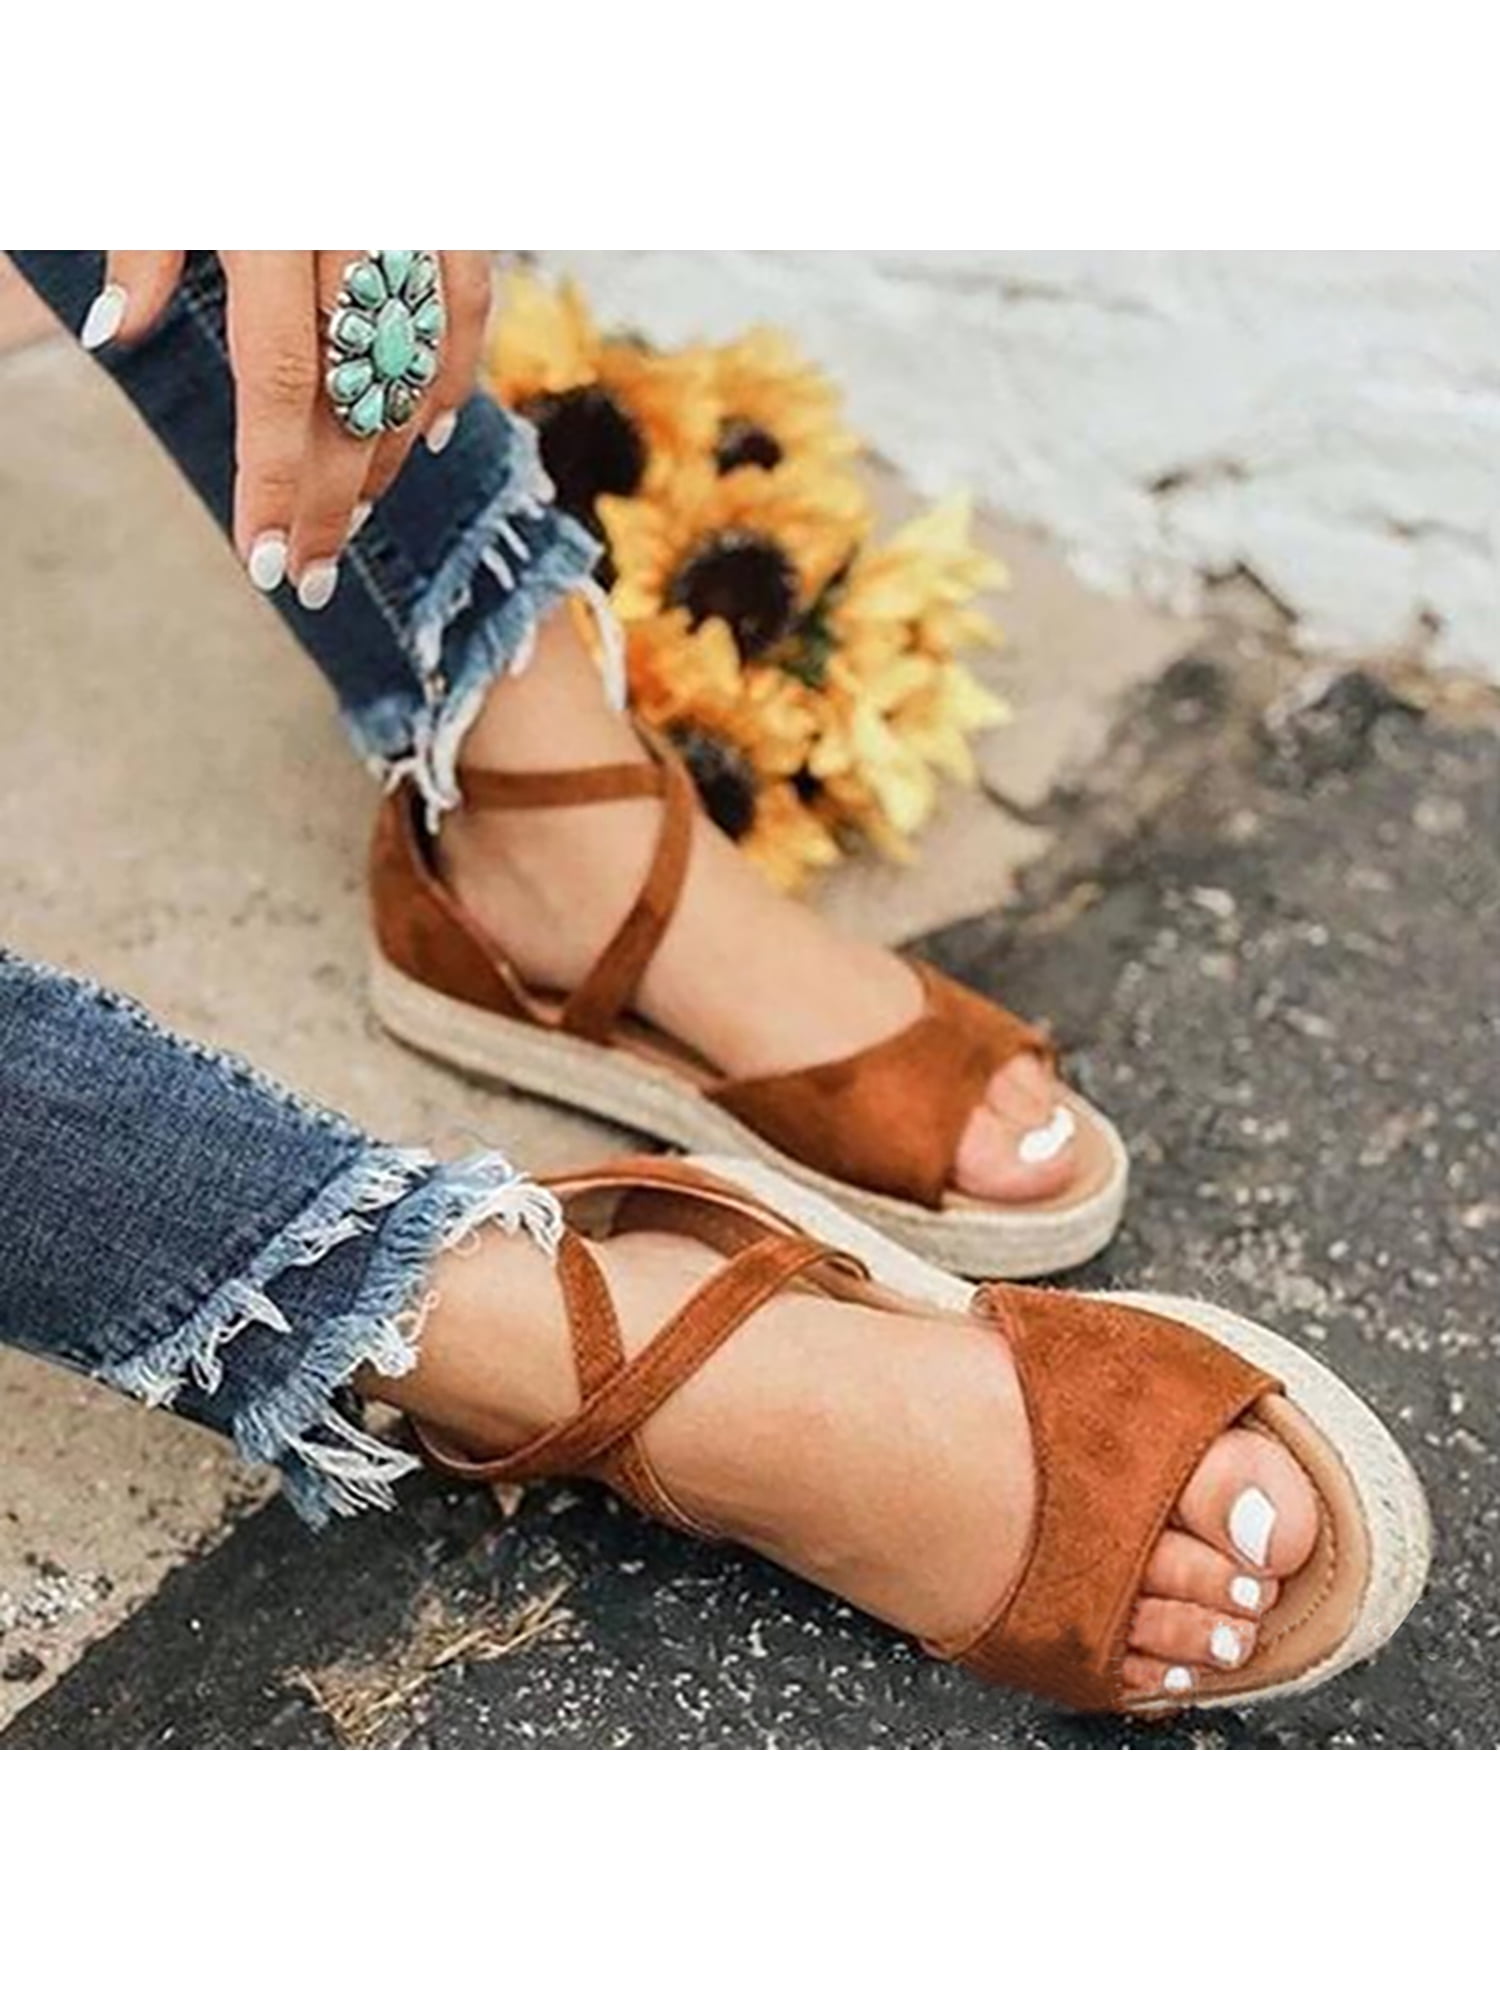 Details about   Womens Ankle Strap Flatform Wedge Shoes Espadrilles Summer Platform Sandals Size 